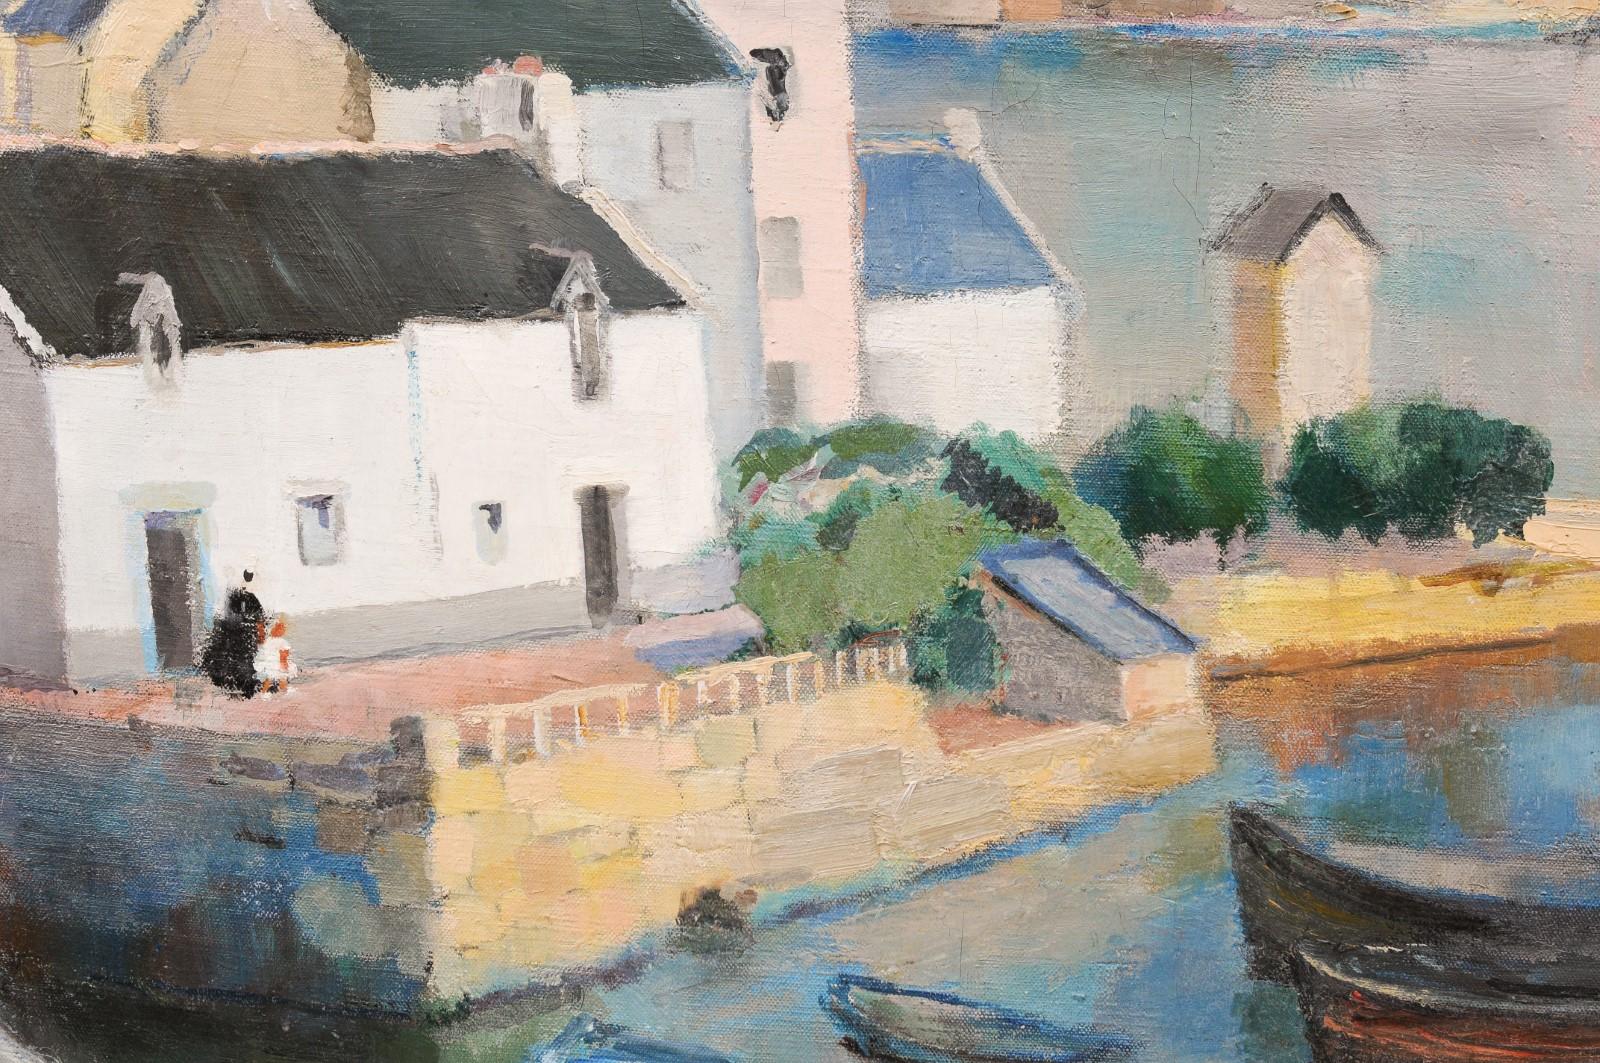 French Harbor Painting by Hortense Pironin Titled 'Le Petit Port à Poul'David' 1